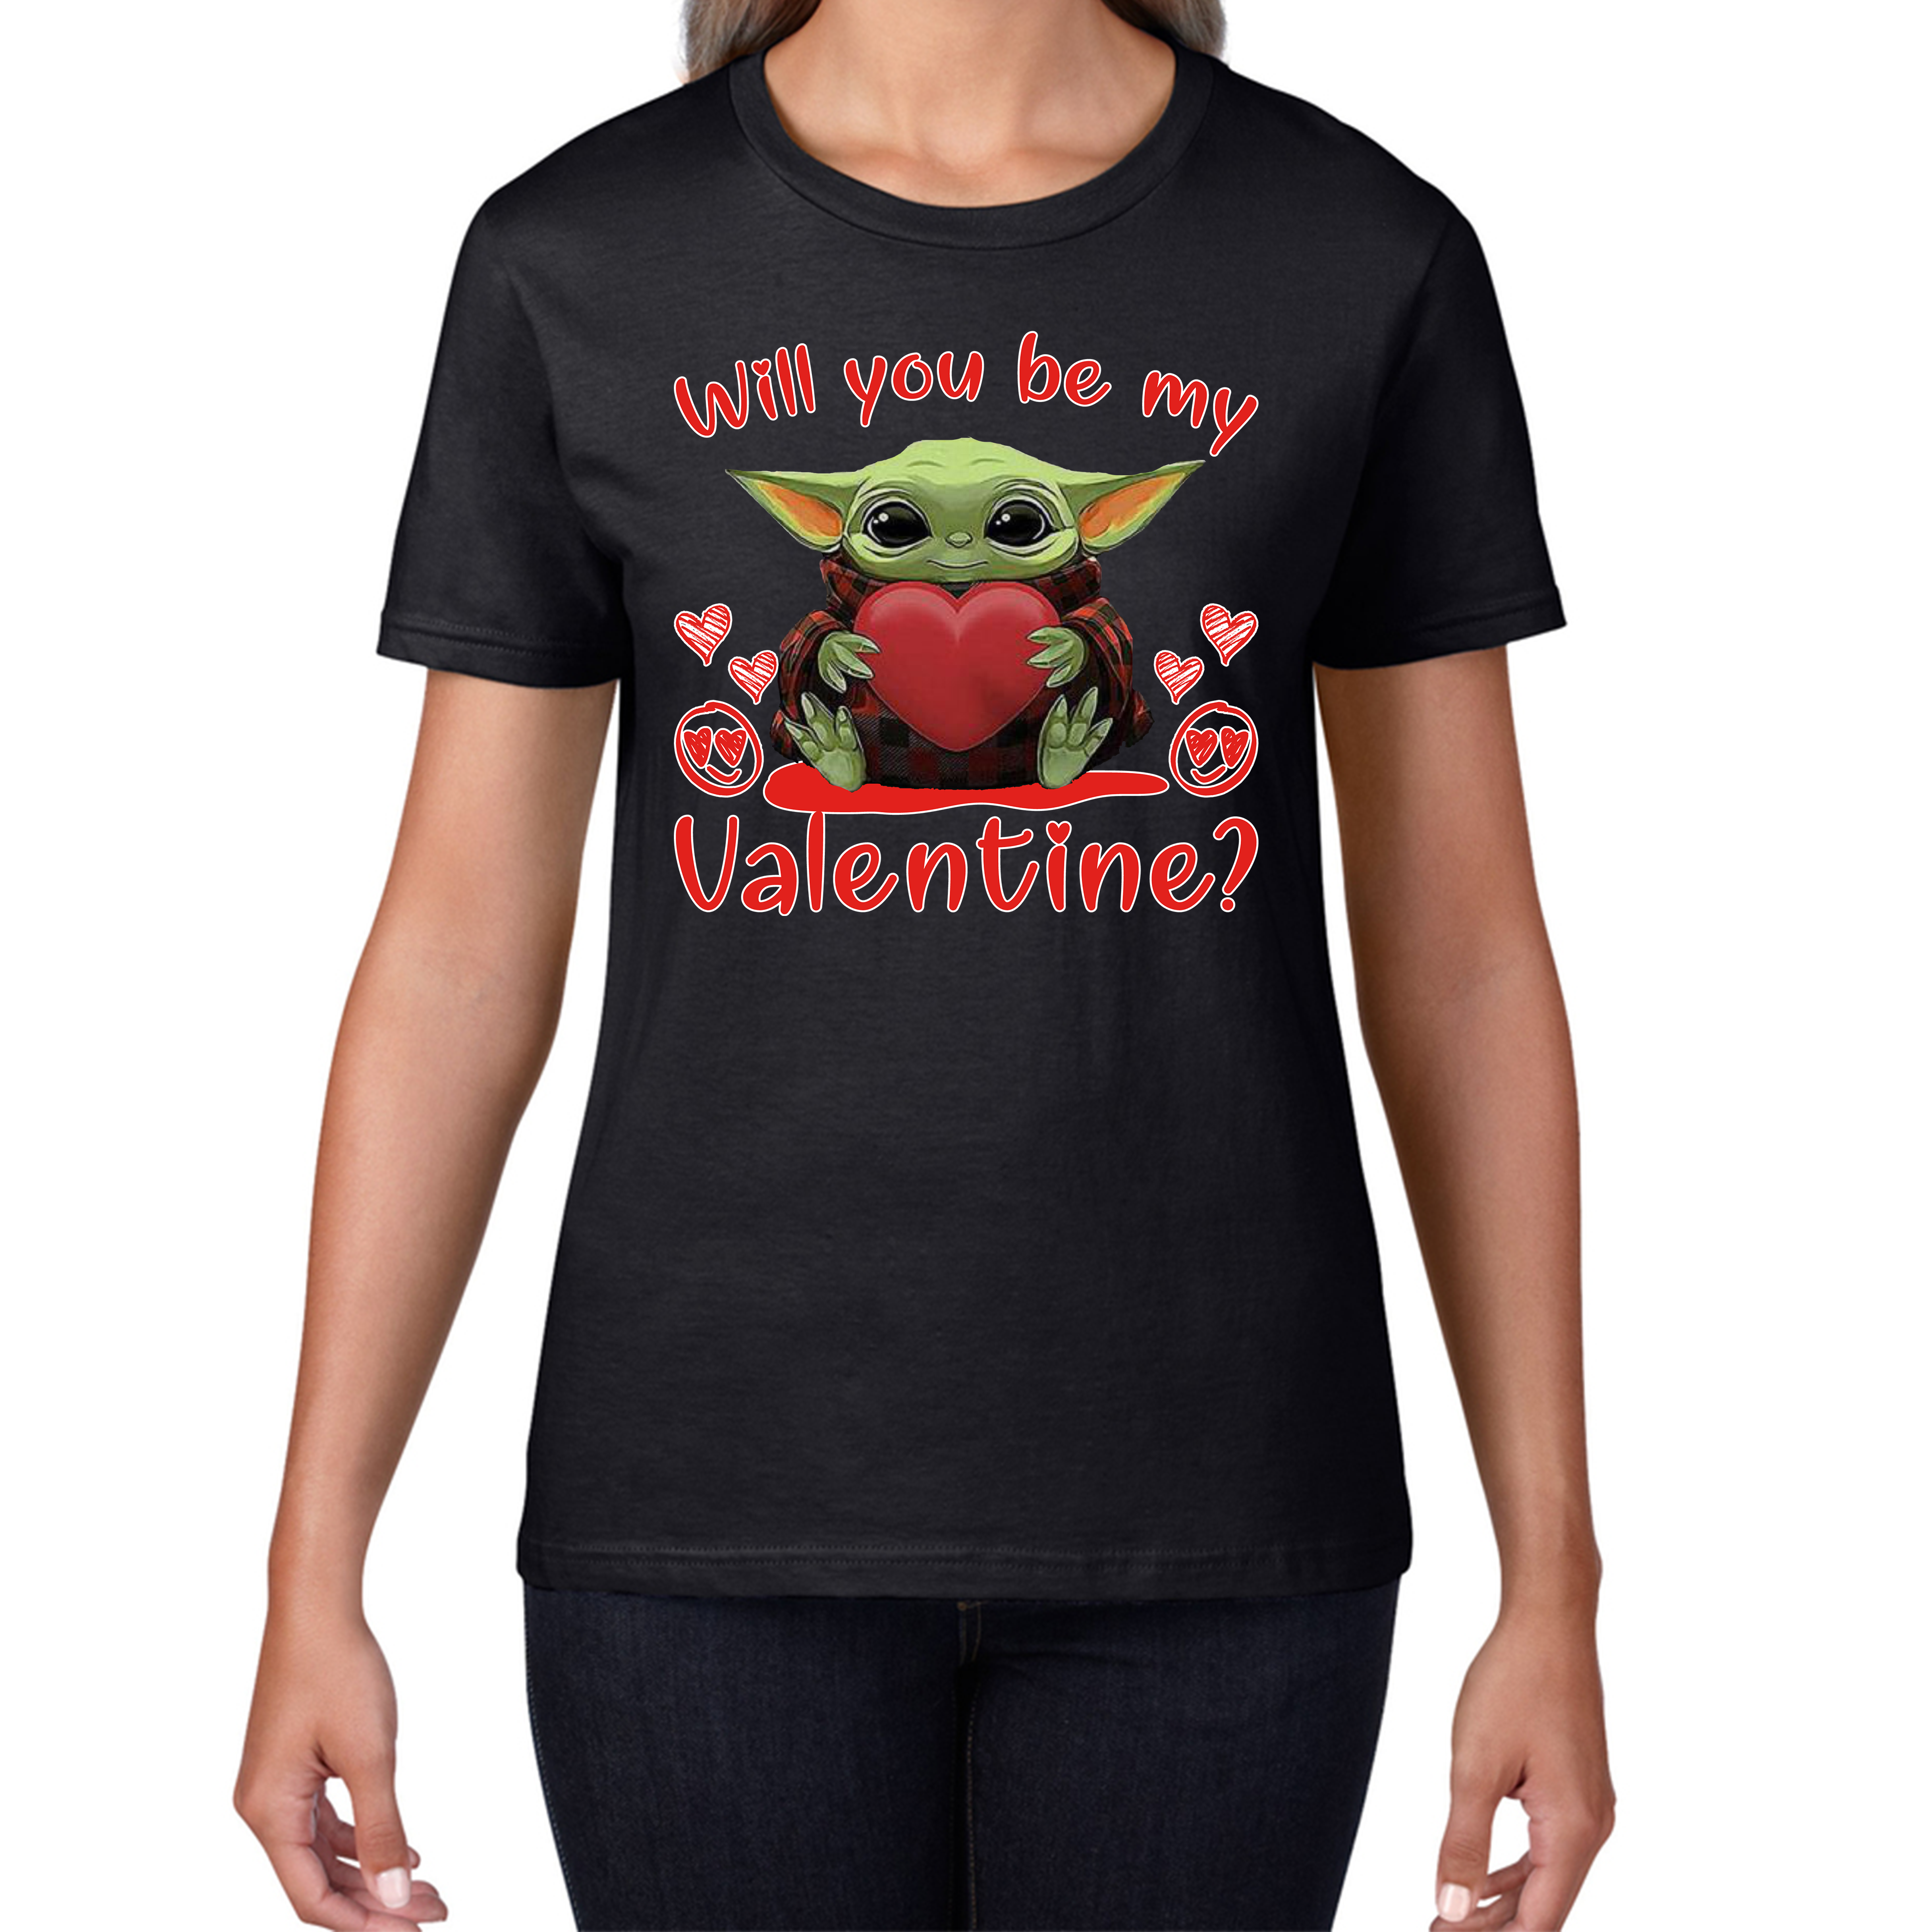 Baby Yoda Ladies Top Will You Be My Valentine Ladies T Shirt